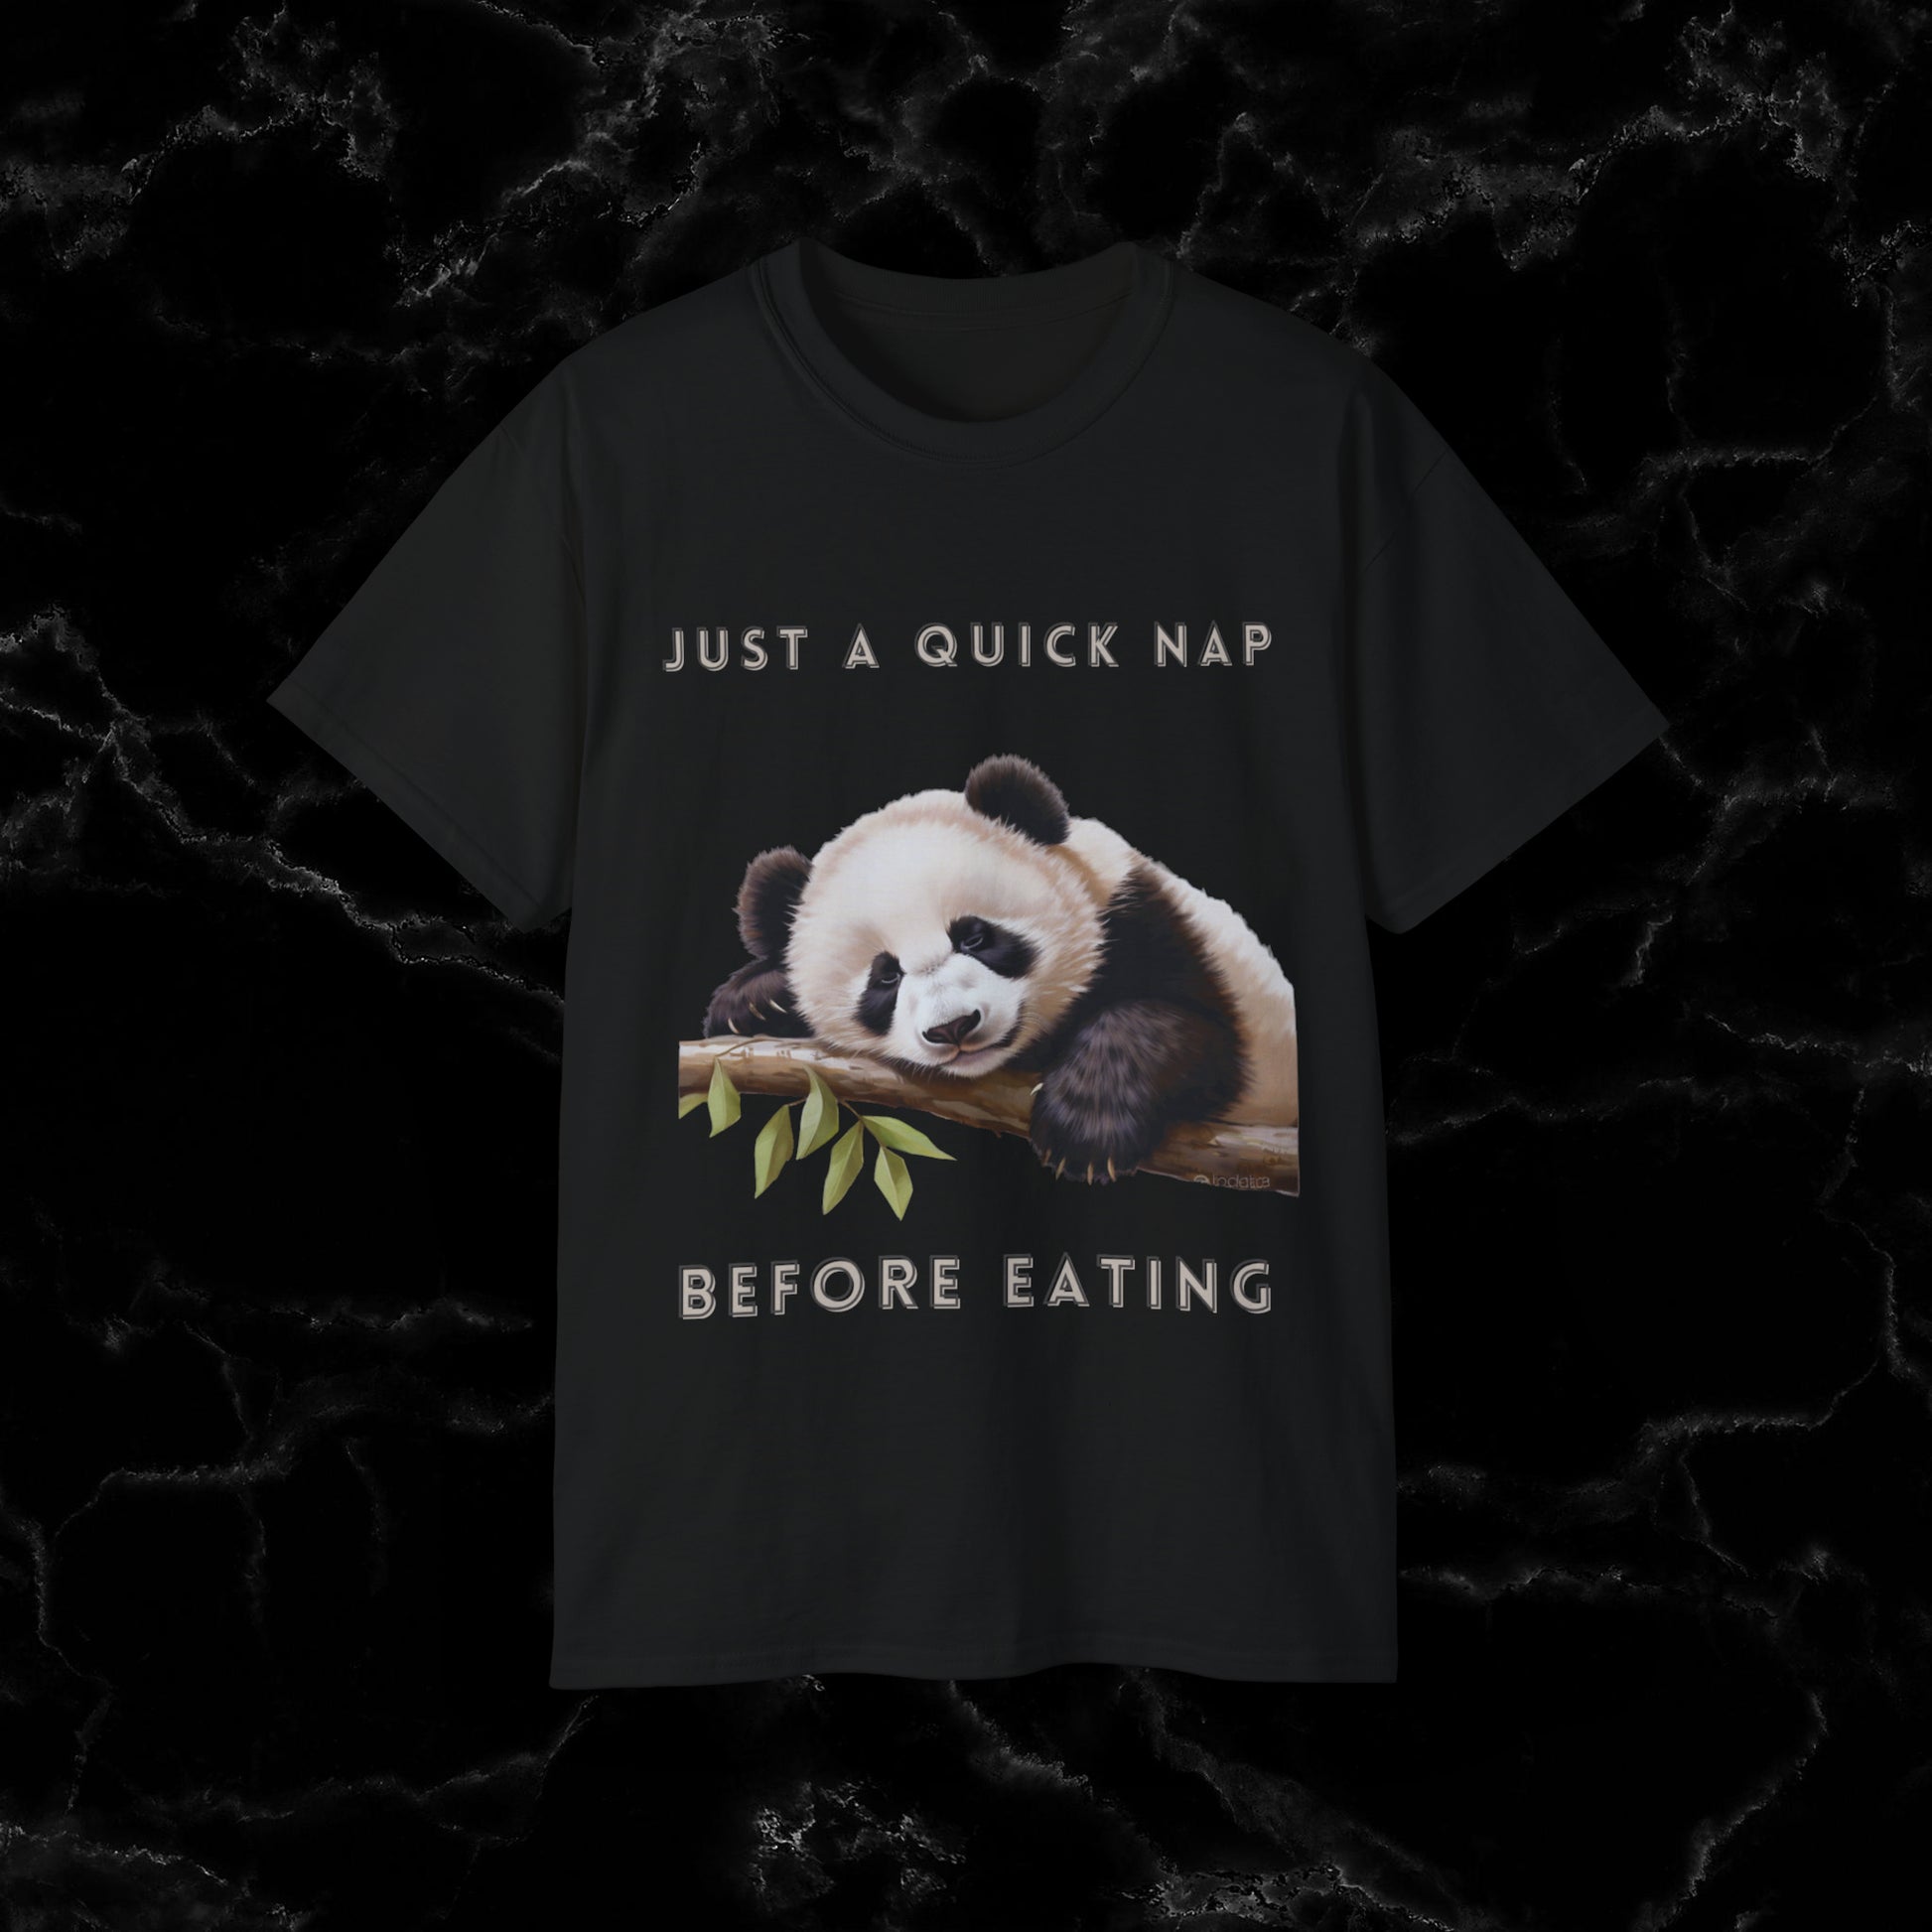 Nap Time Panda Unisex Funny Tee - Hilarious Panda Nap Design - Just a Quick Nap Before Eating T-Shirt Black S 